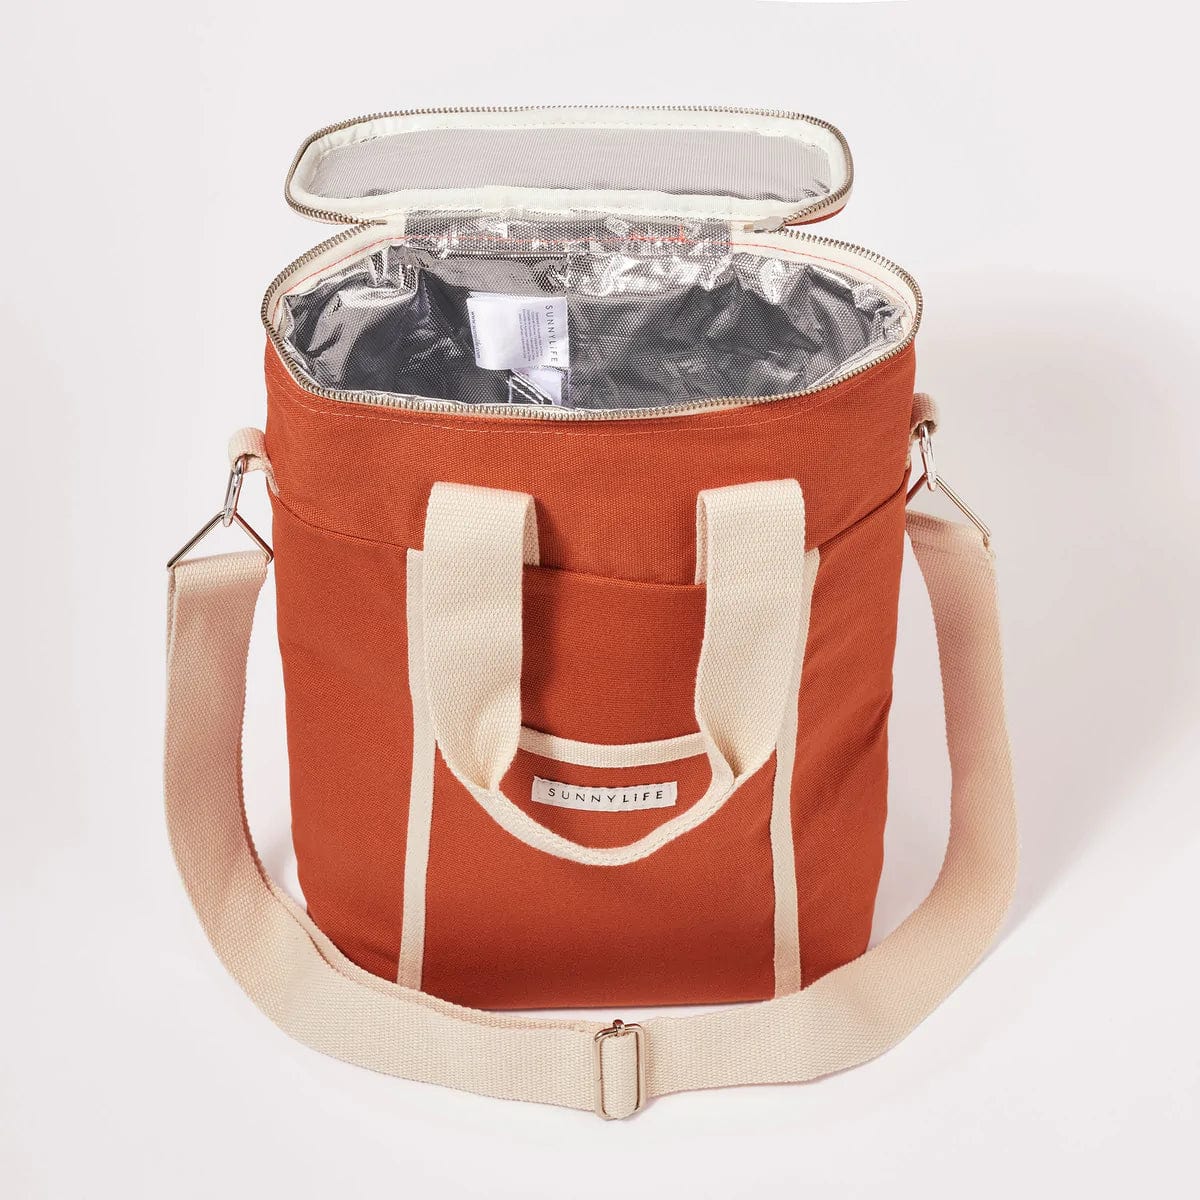 SUNNYLiFE Canvas Drinks Bag - Terracotta Drinks Bag